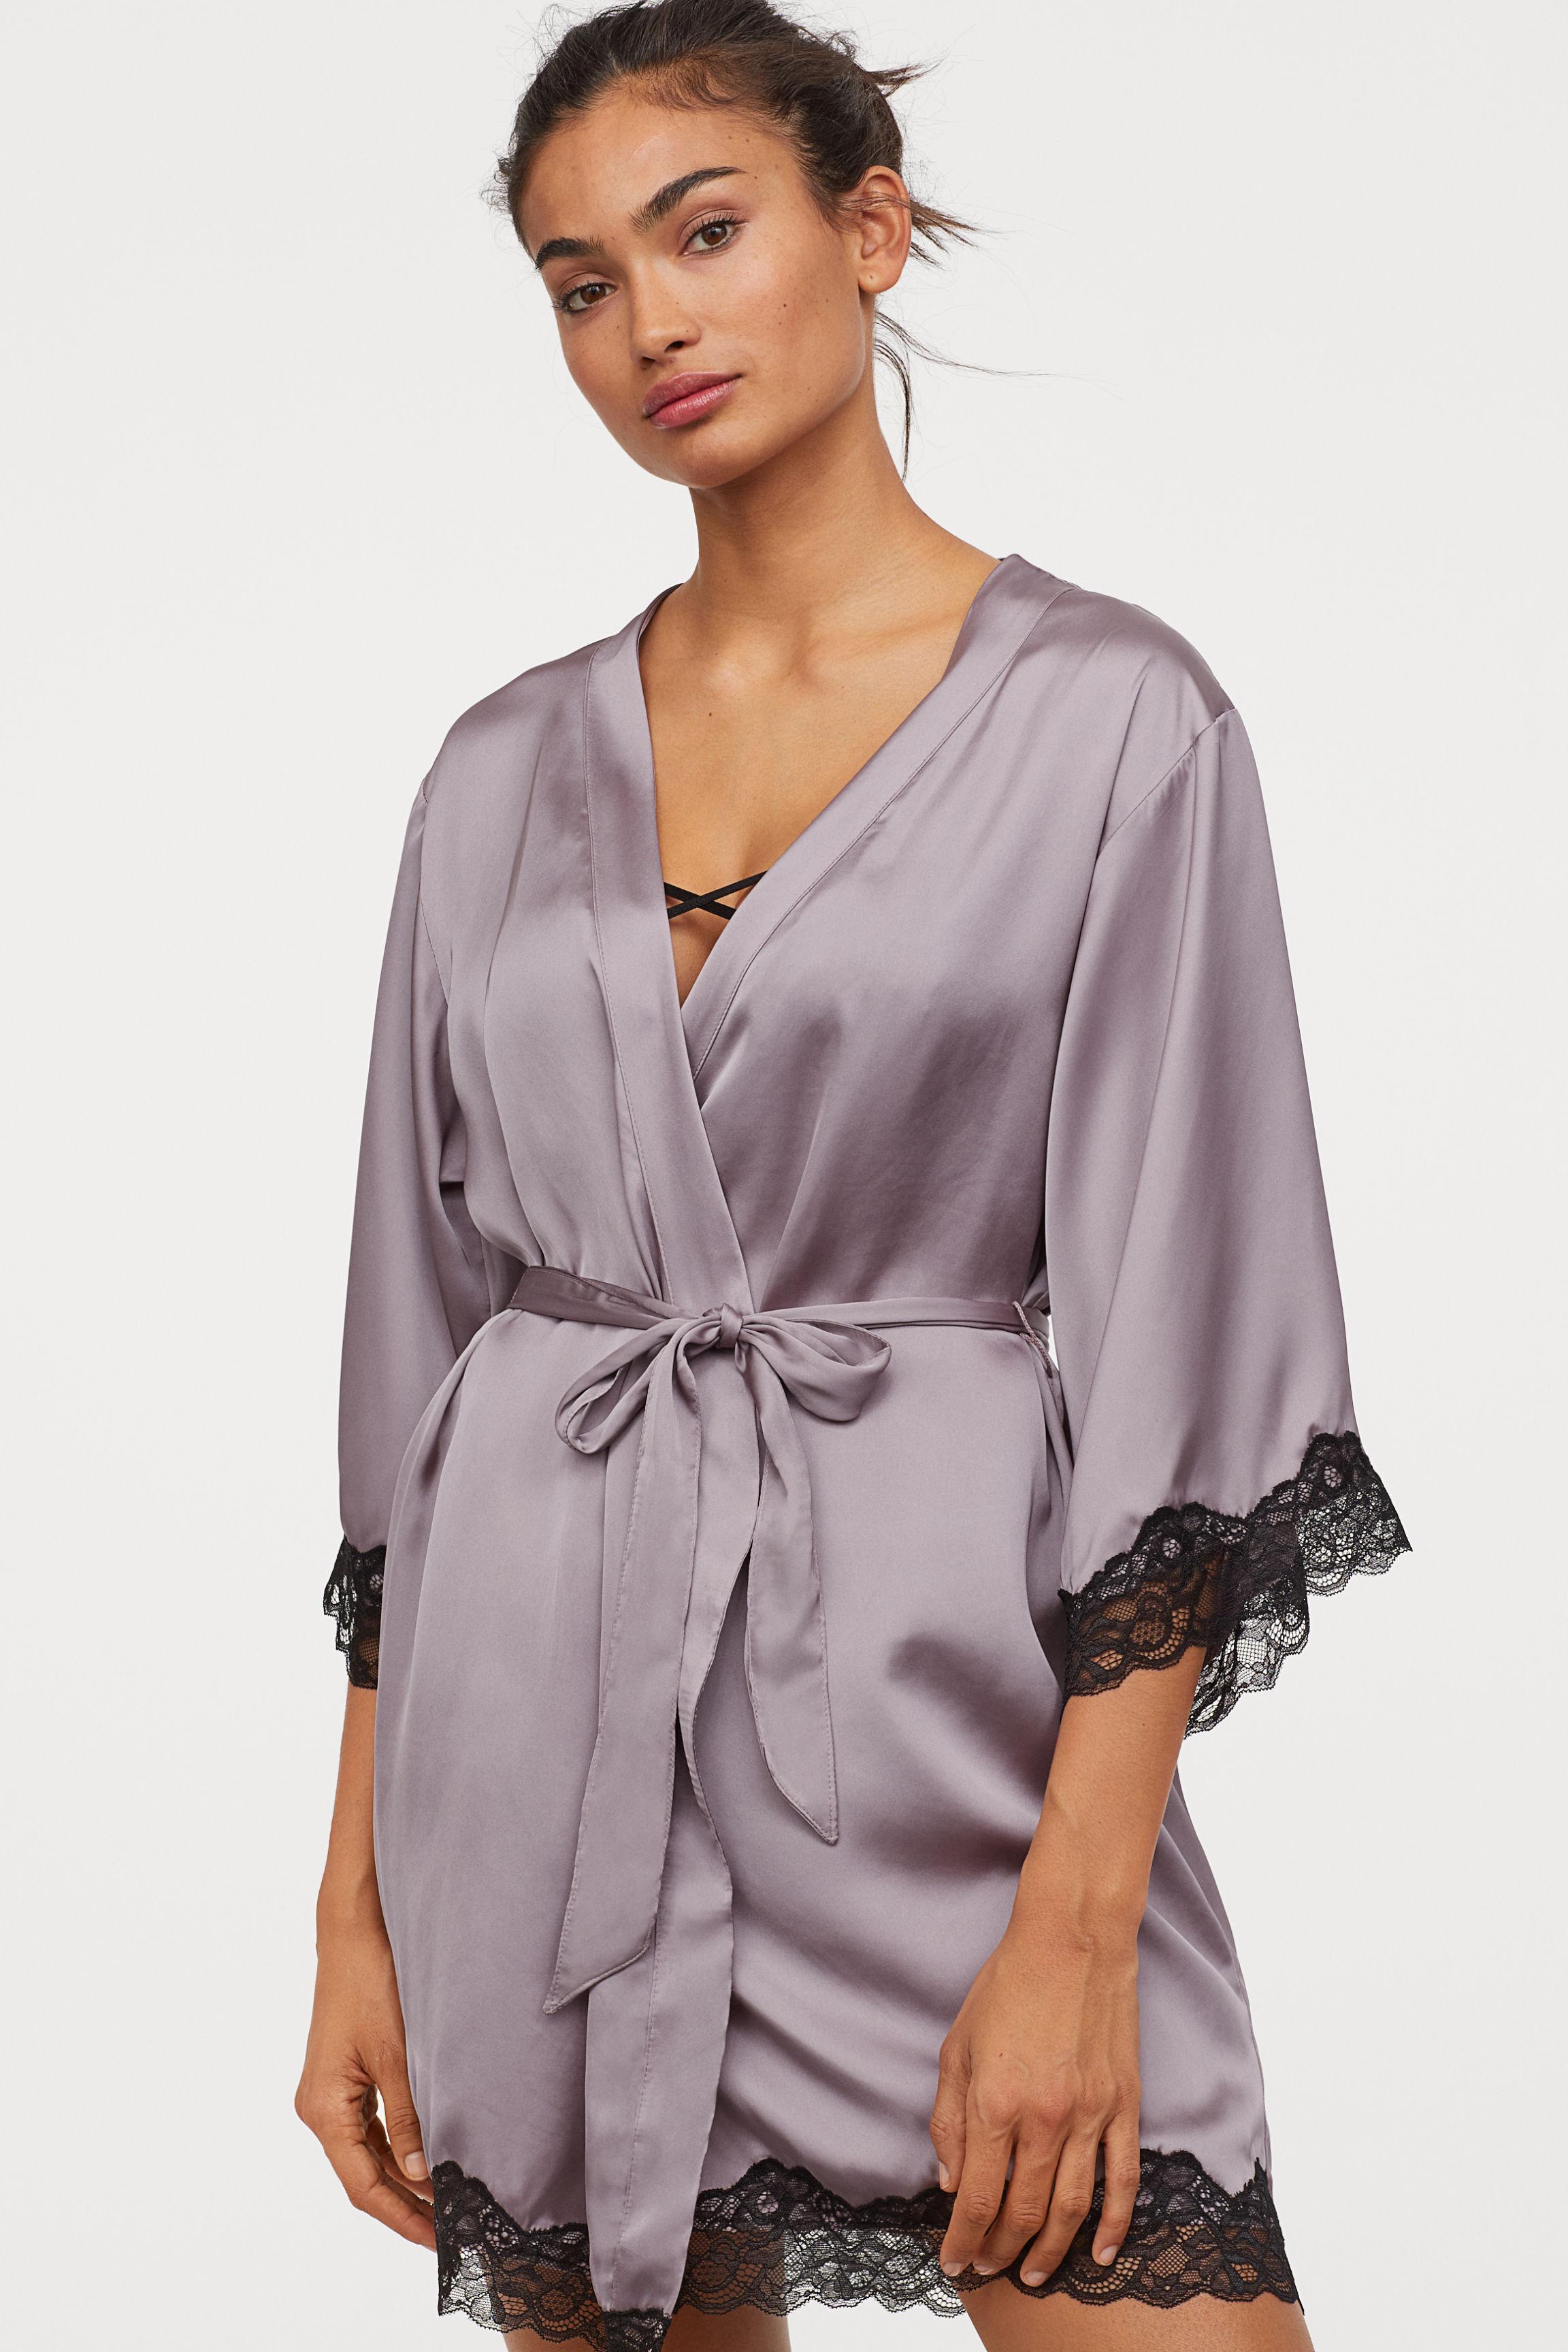 H&M Satin Kimono in Heather Purple (Purple) - Lyst